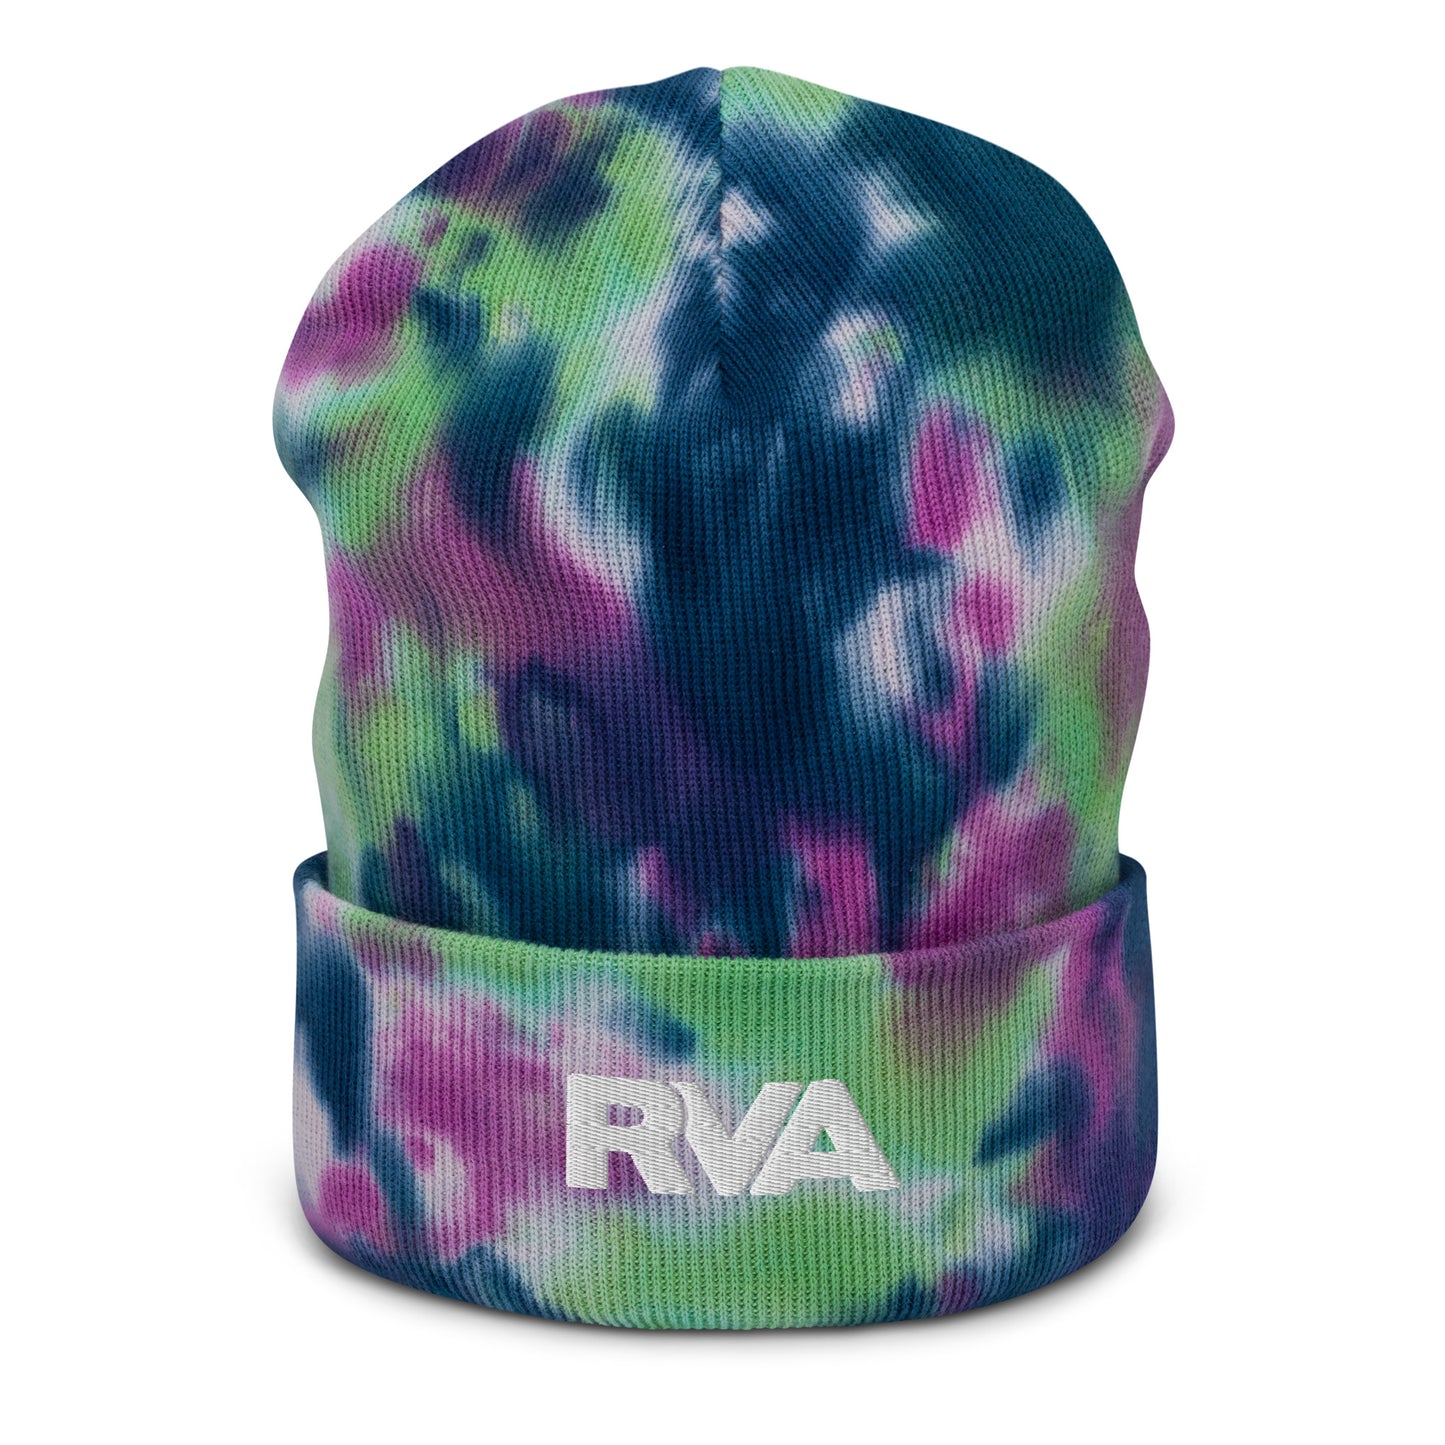 RVA / Richmond VA / Tie Dye Beanie